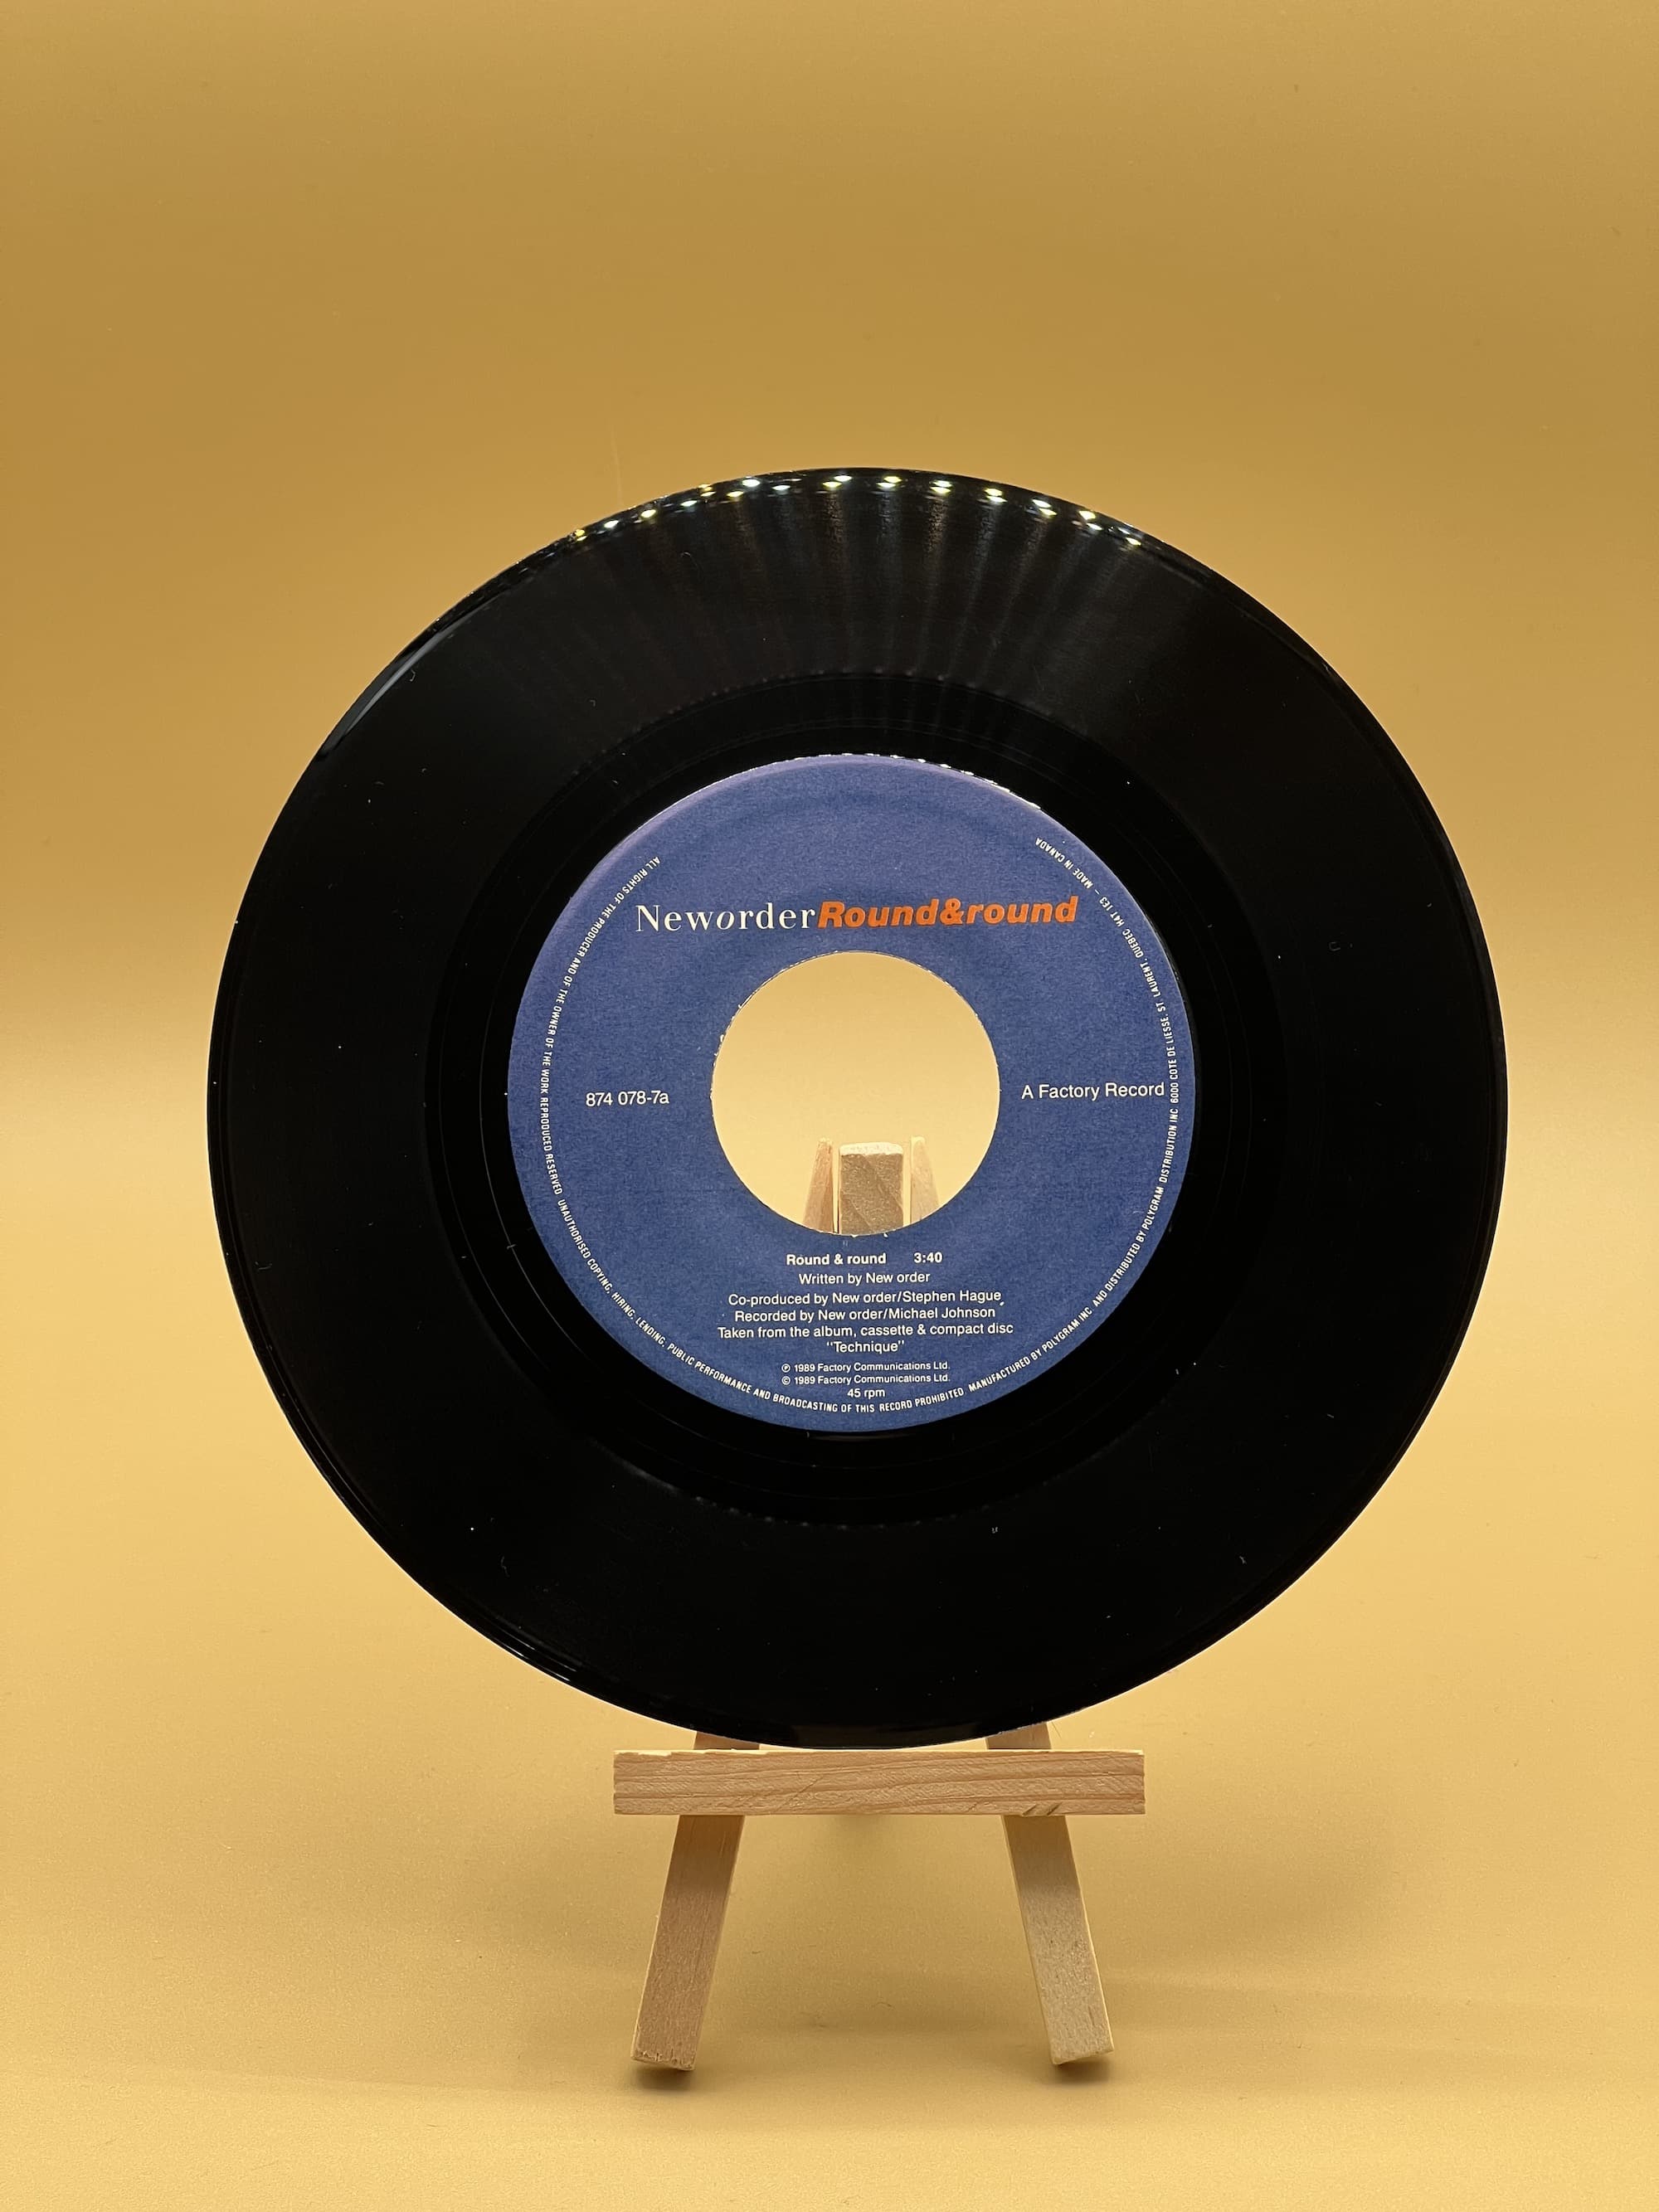 Carpenters - Rainy Days And Mondays AM 1260 PS Vinyl 45 rpm Record